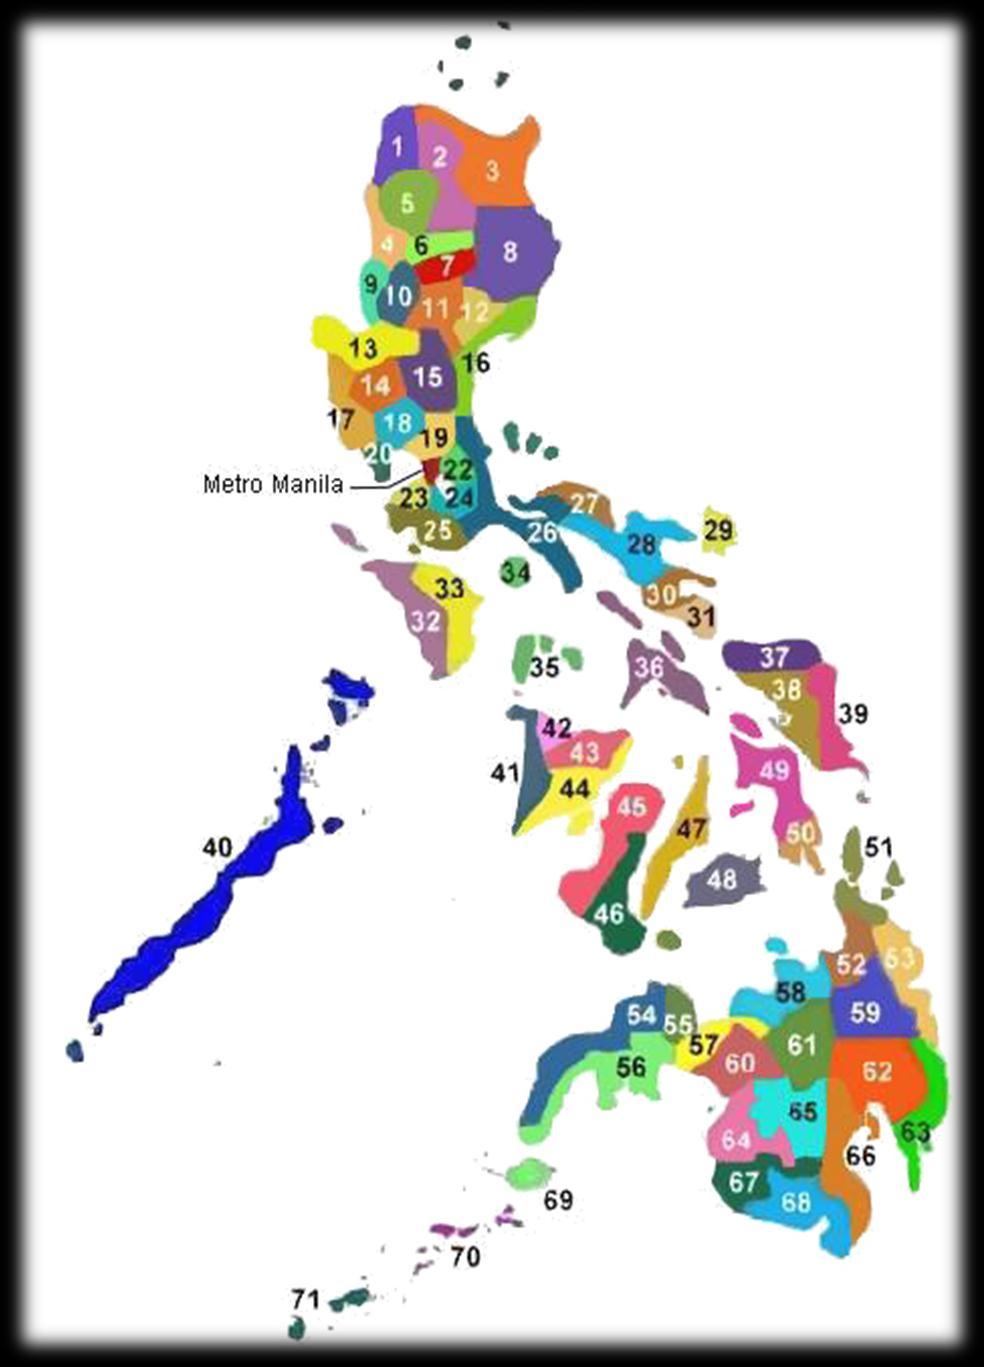 Mt. Province (6) Oriental Mindoro (33) Occidental Mindoro (32) Palawan (40) Negros Occidental (45) Zamboanga del Norte (54)